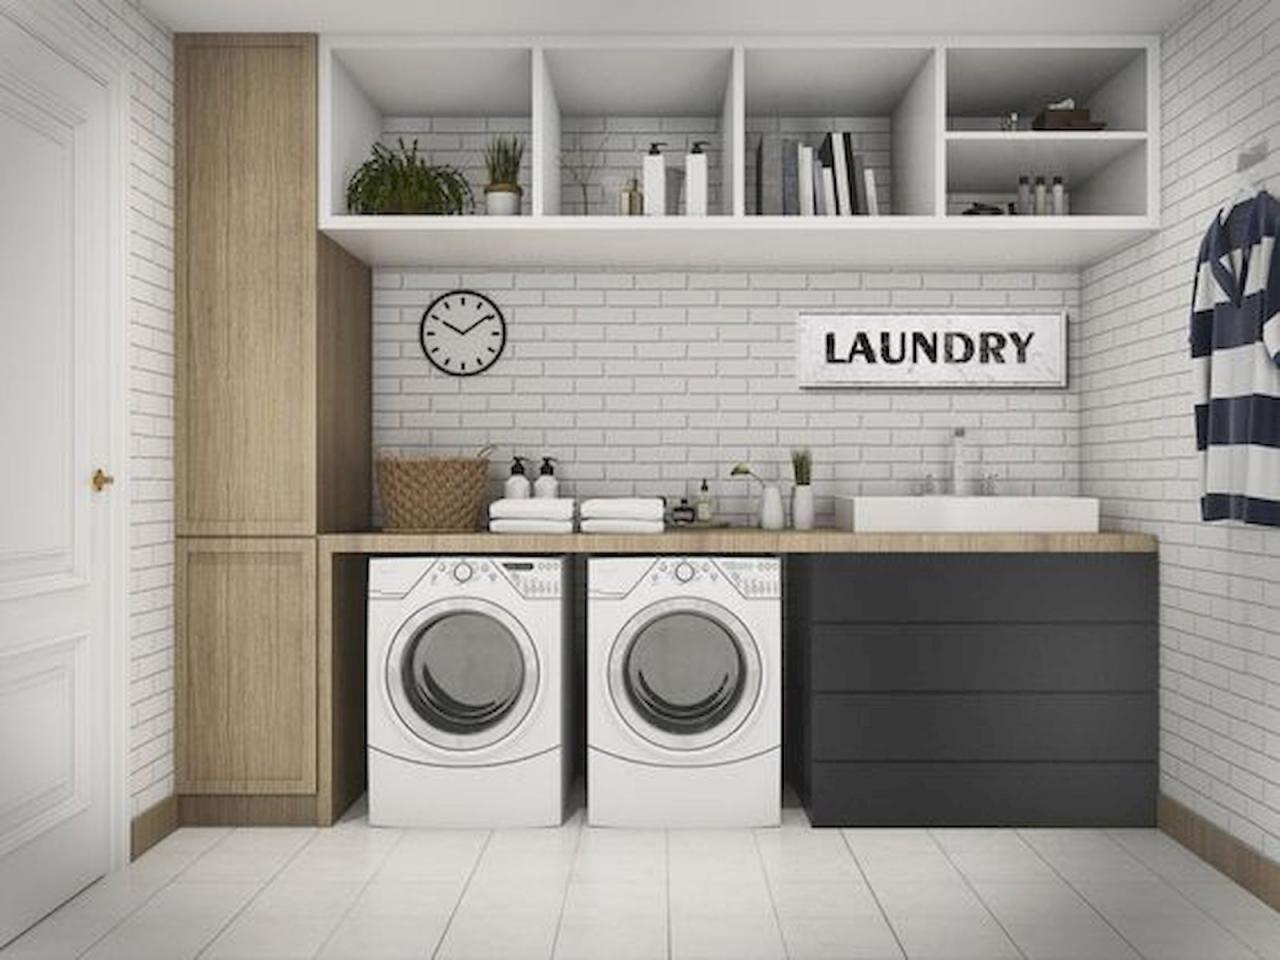 Laundry design tips 2019 Auckland Home Show